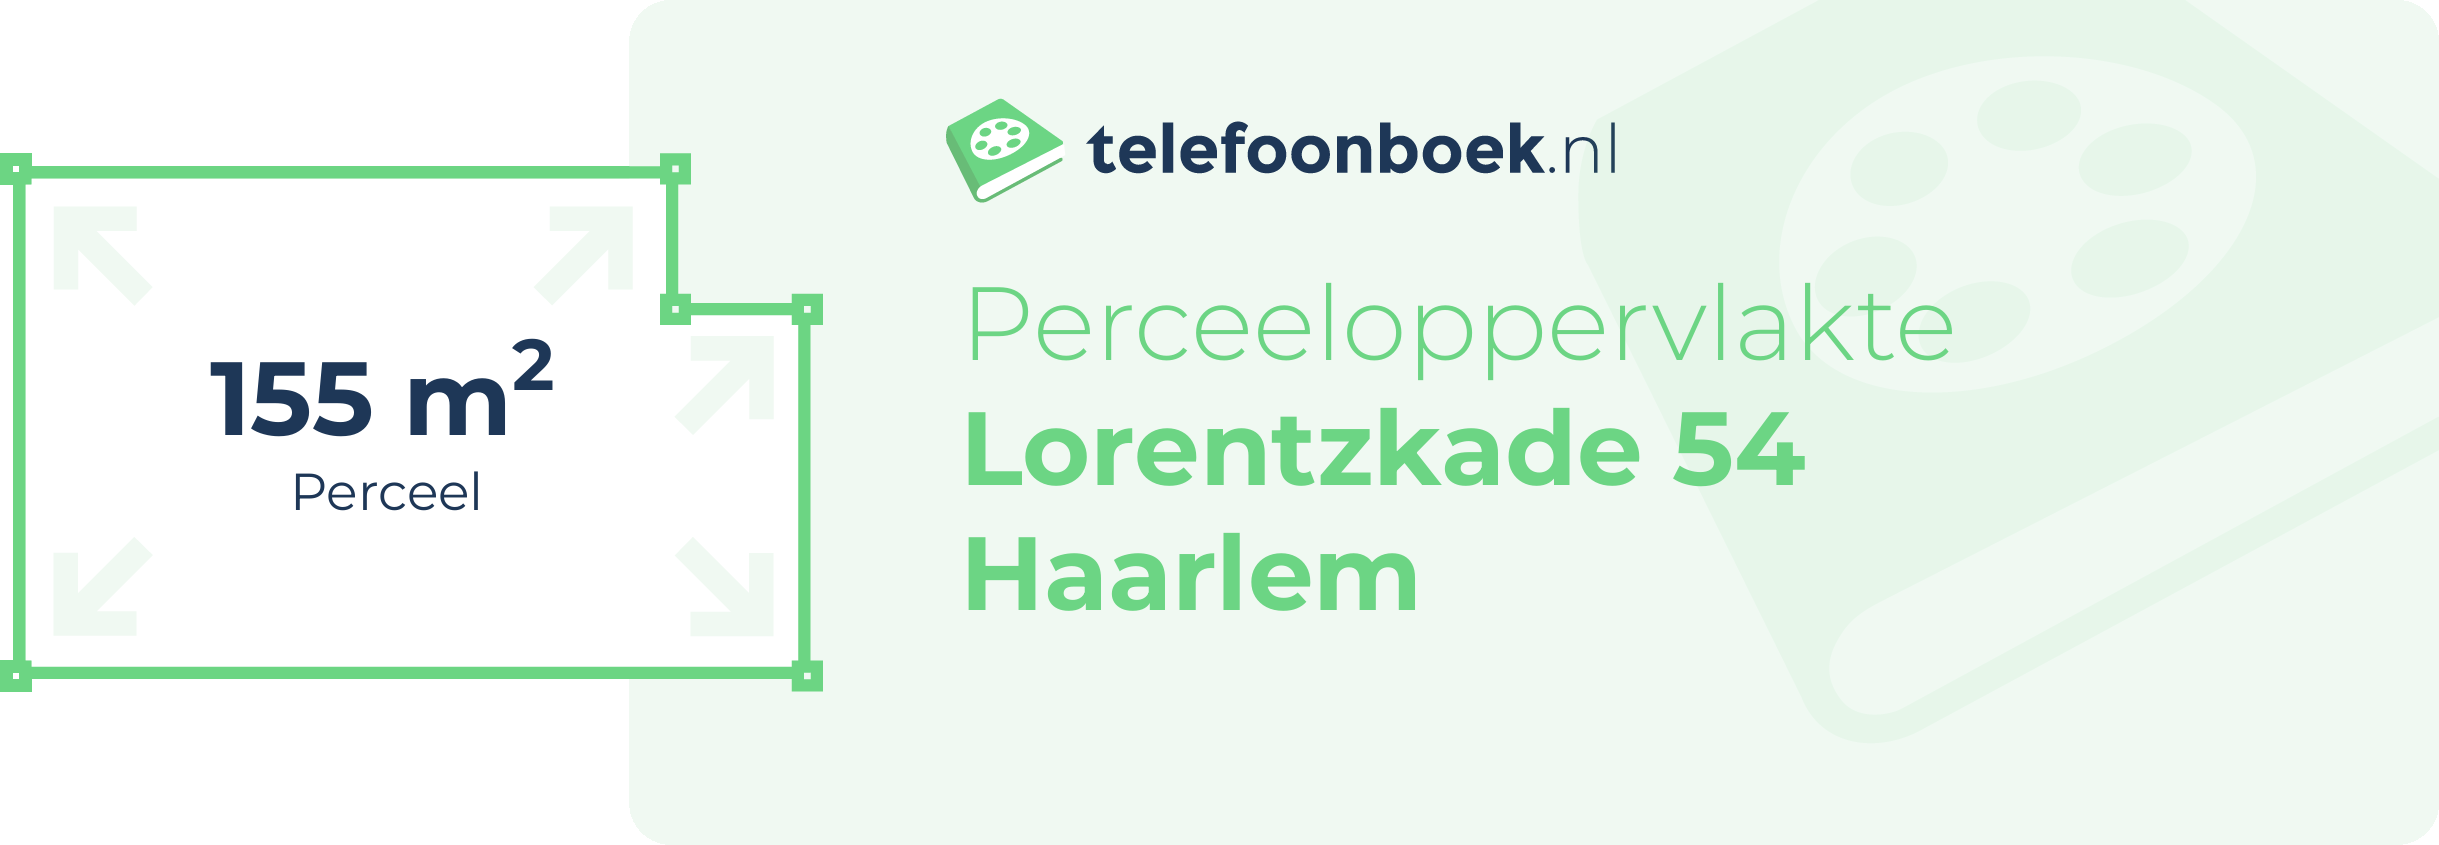 Perceeloppervlakte Lorentzkade 54 Haarlem